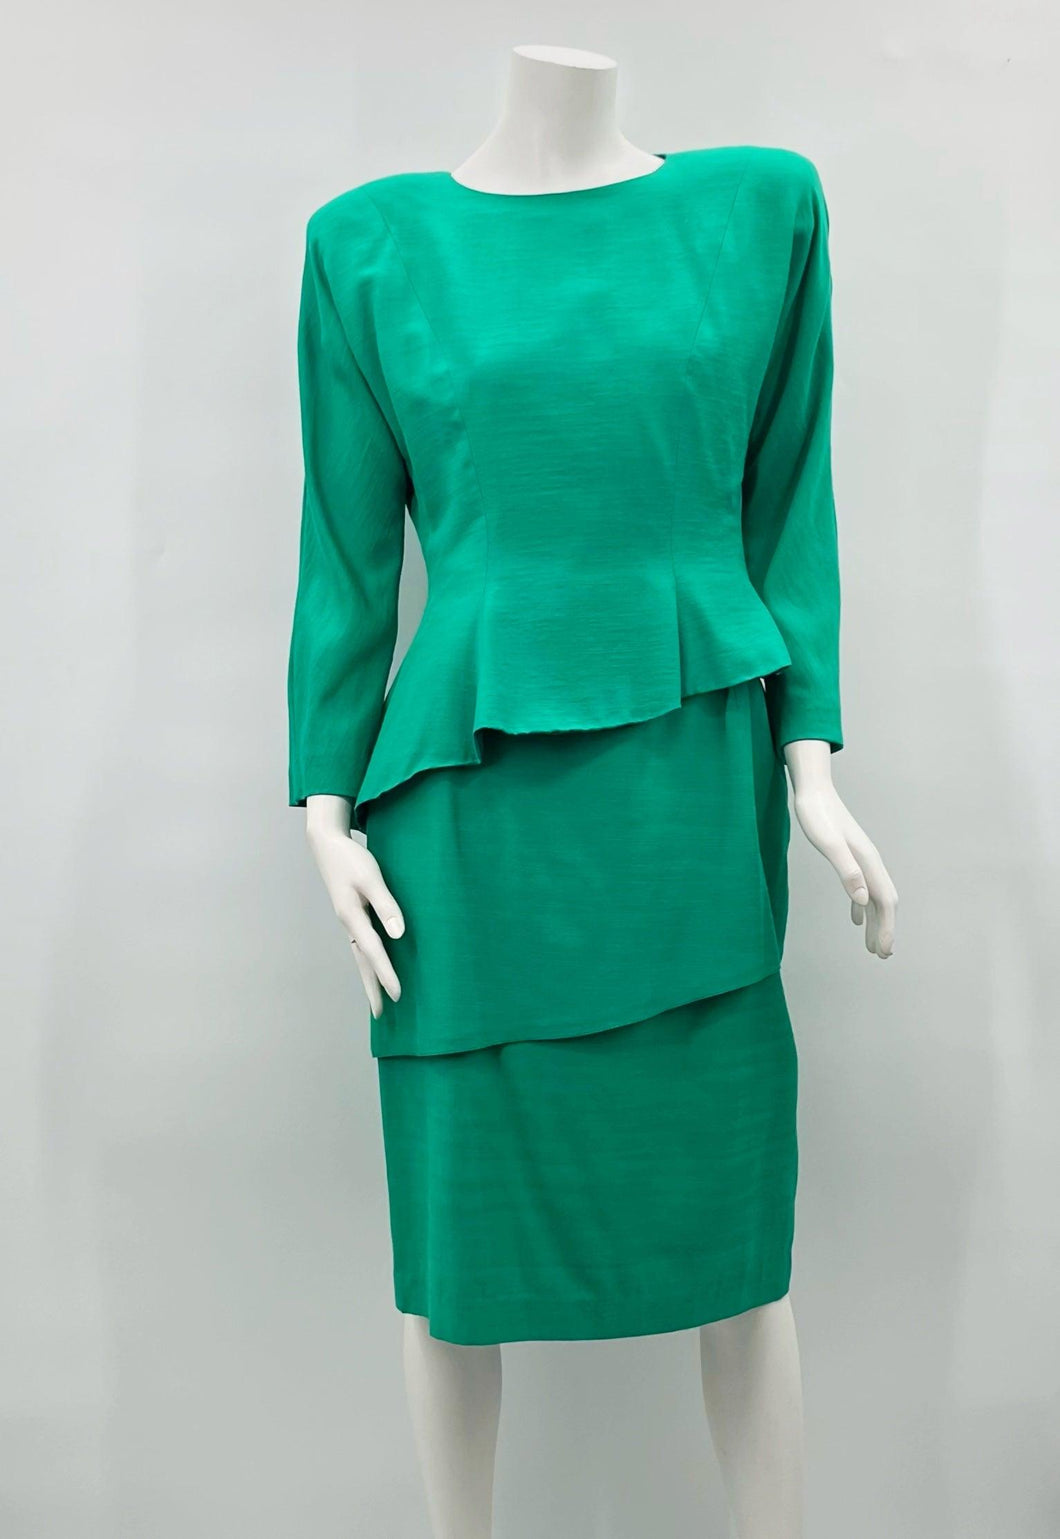 A-Symetrical Green Skirt Set